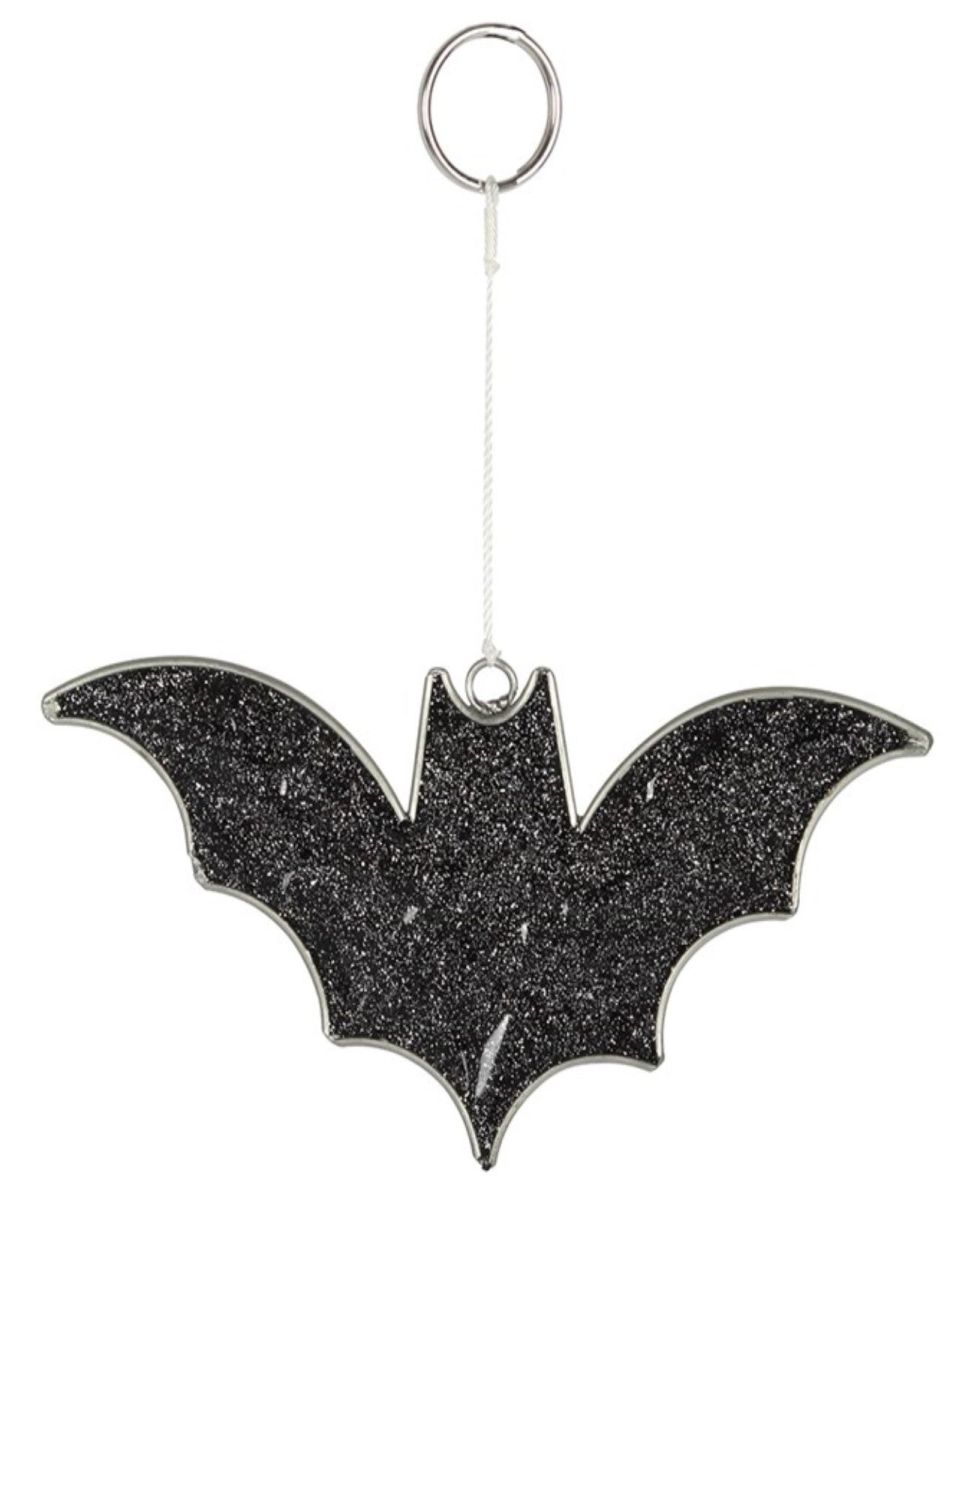 Bat suncatcher RRP £9.99